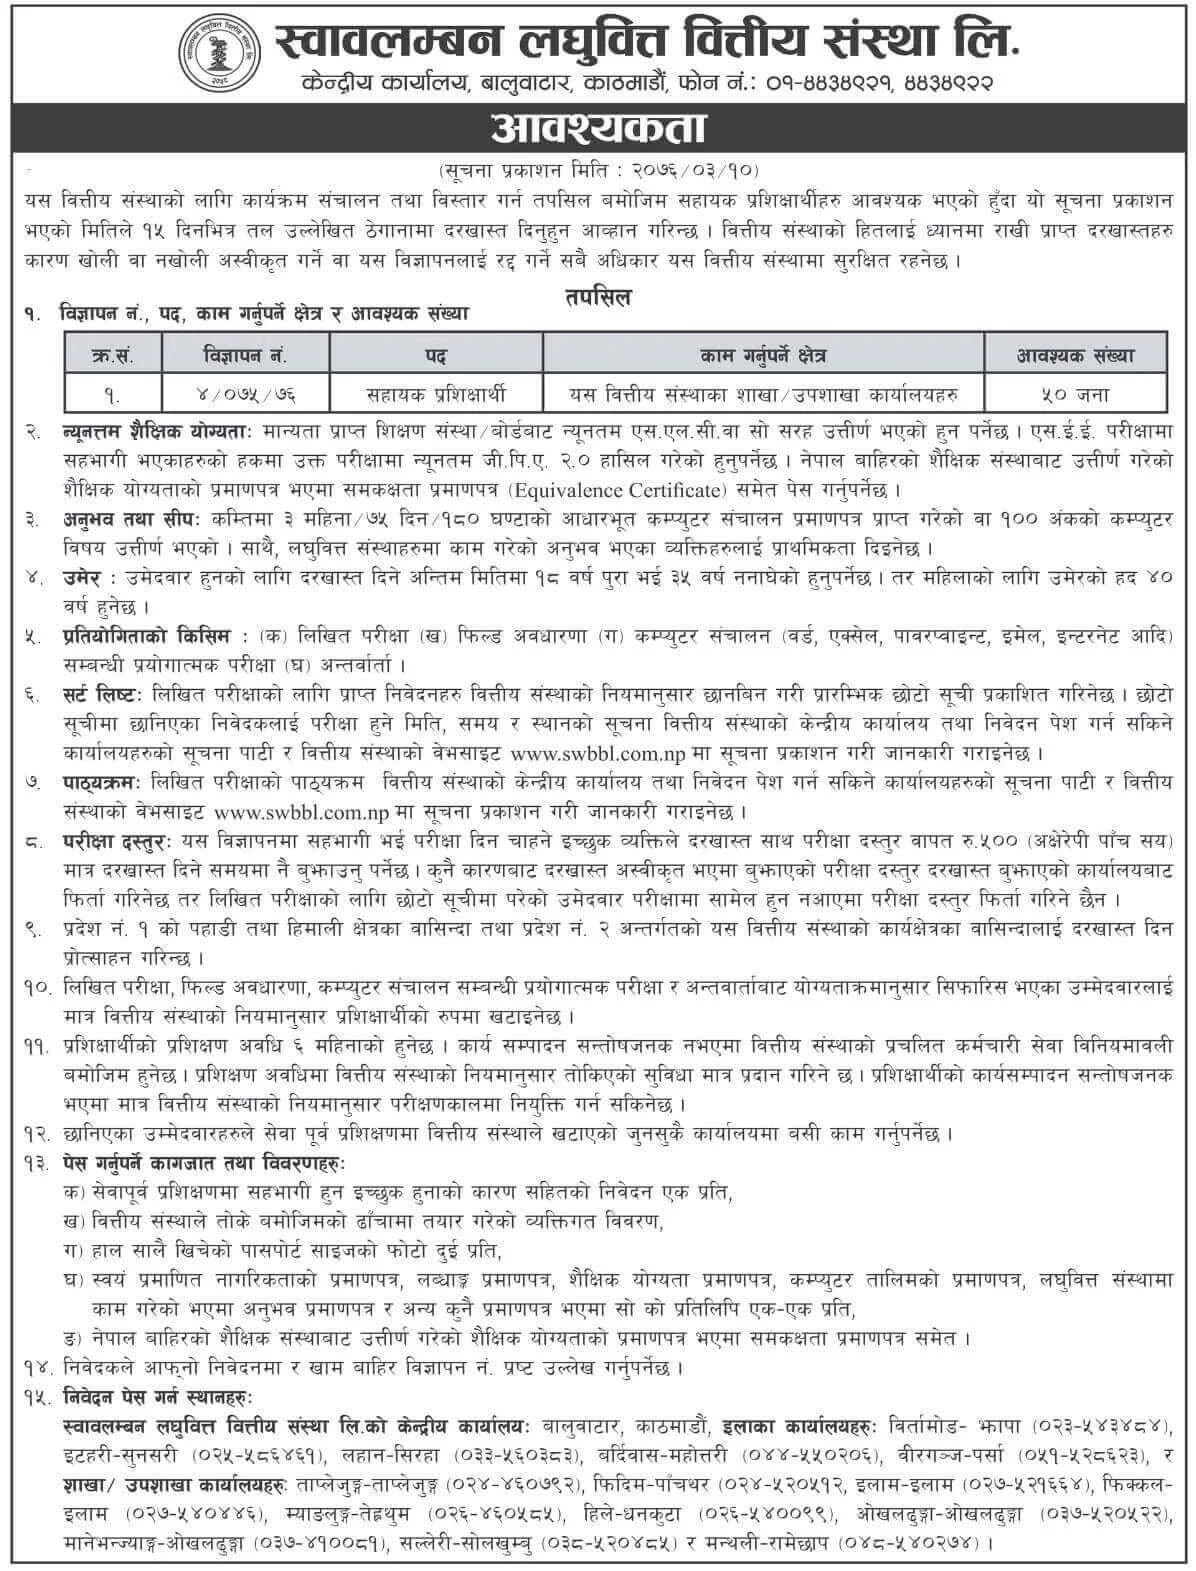 Swabalamban Laghubitta Bittiya Sanstha Ltd. Vacancy Notice for Trainee Assistant